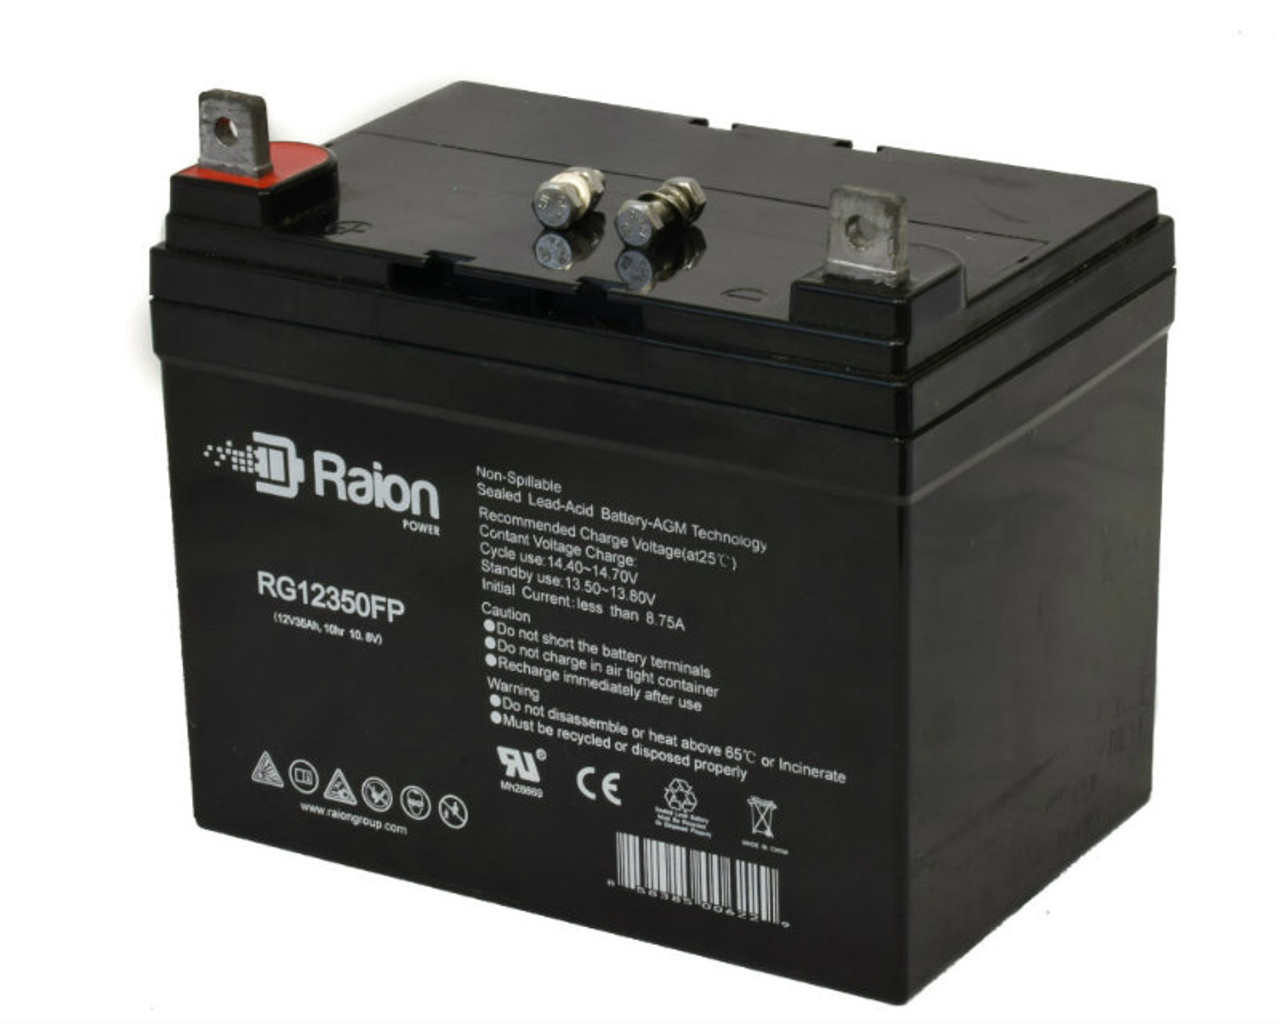 Raion Power Replacement 12V 35Ah RG12350FP Battery for Sunlight SPB 12-33